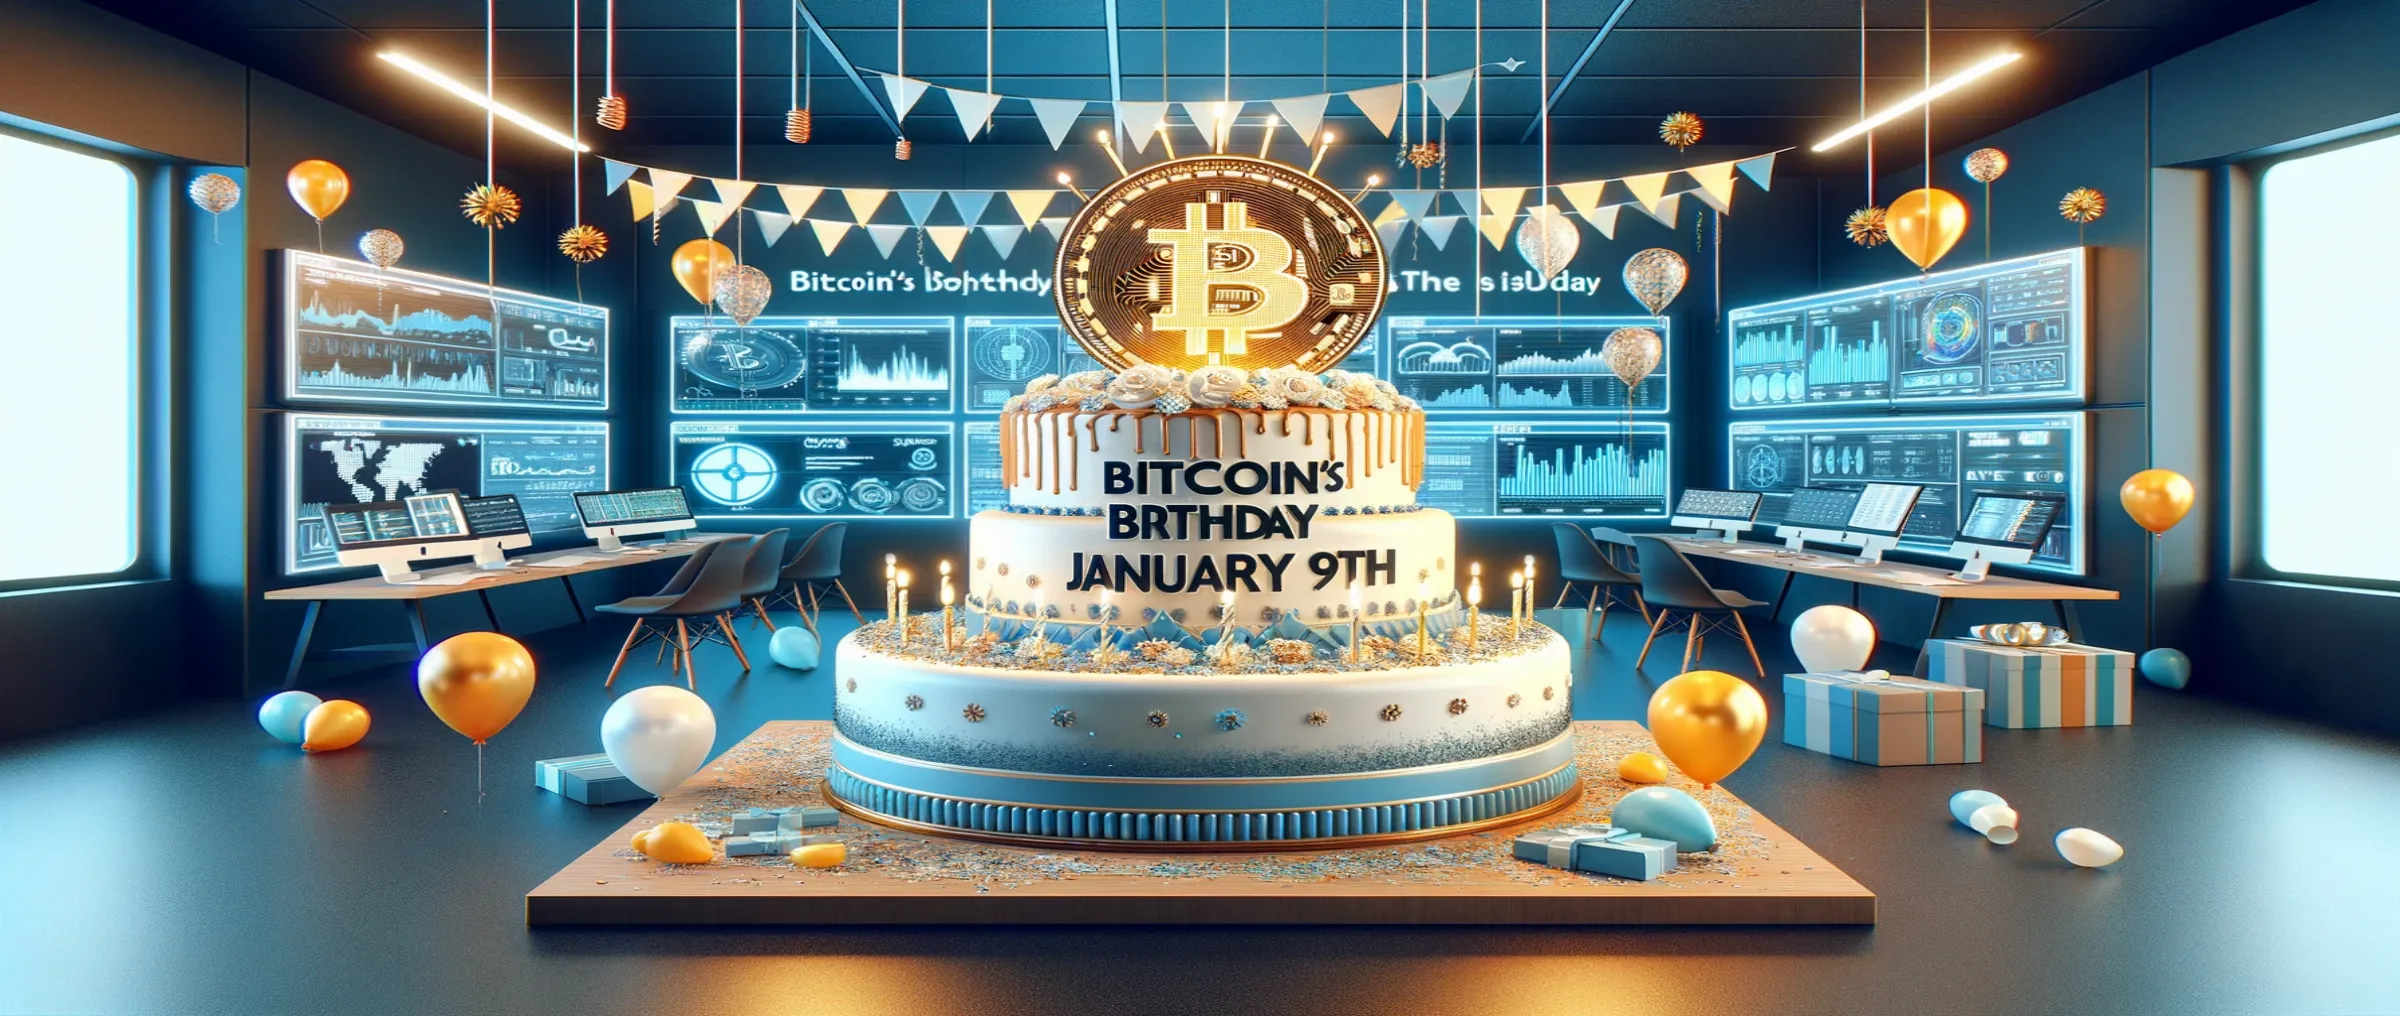 Vytautas Kasheta: "Bitcoin's real birthday is January 9th"